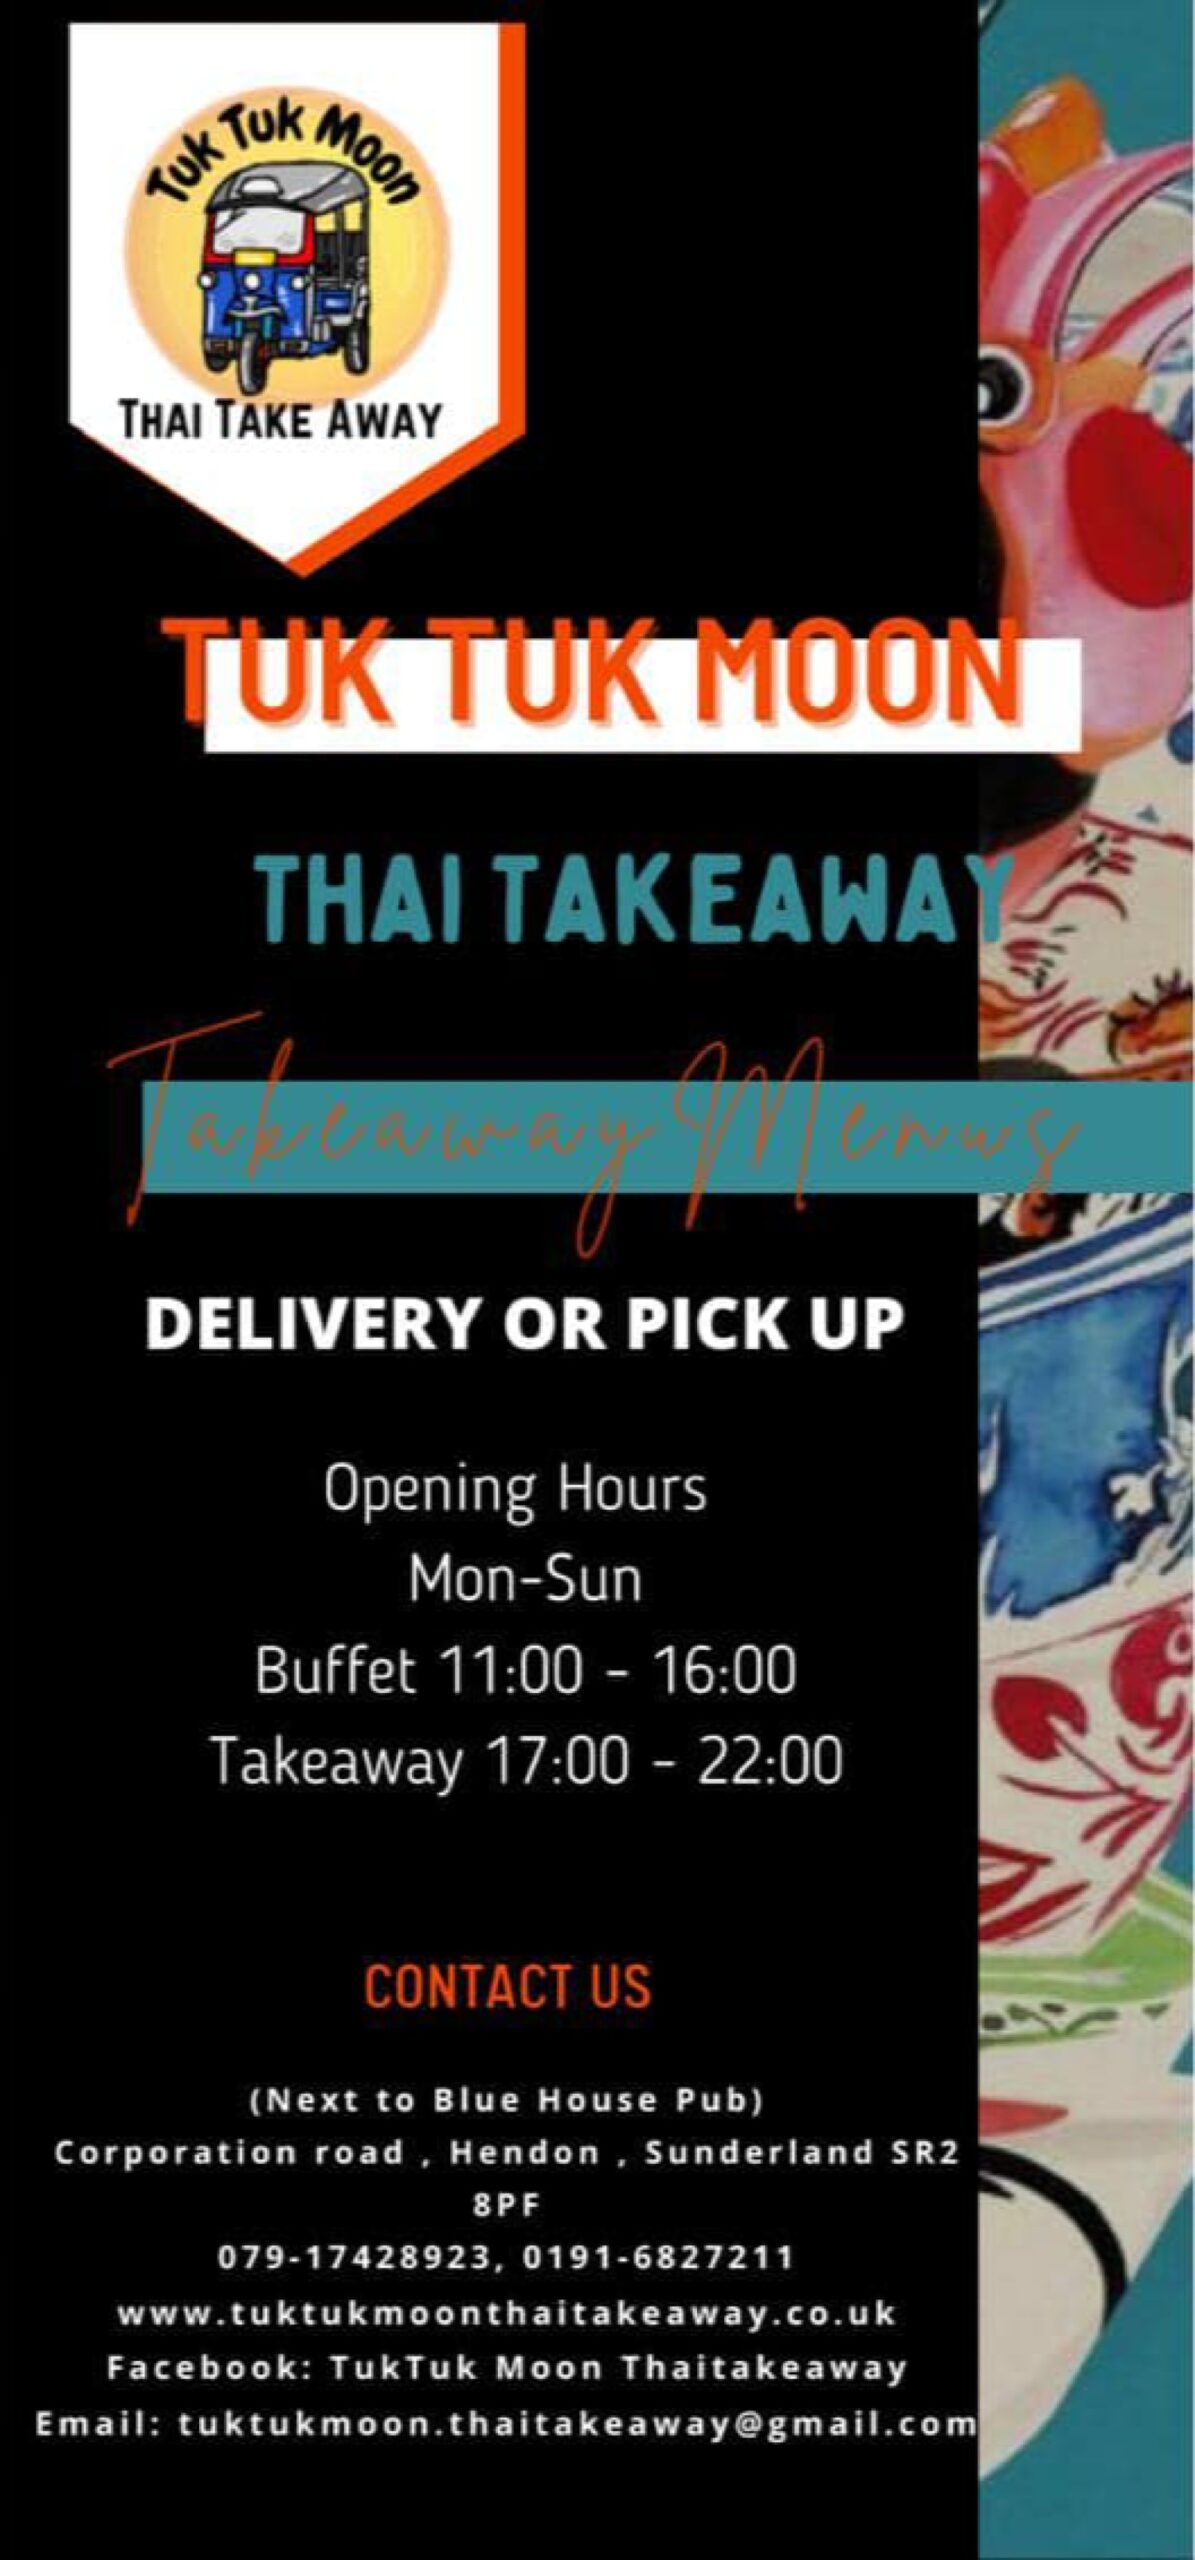 Takeaway Restaurant Menu Page - Tuk Tuk Moon Thai Takeaway - Sunderland